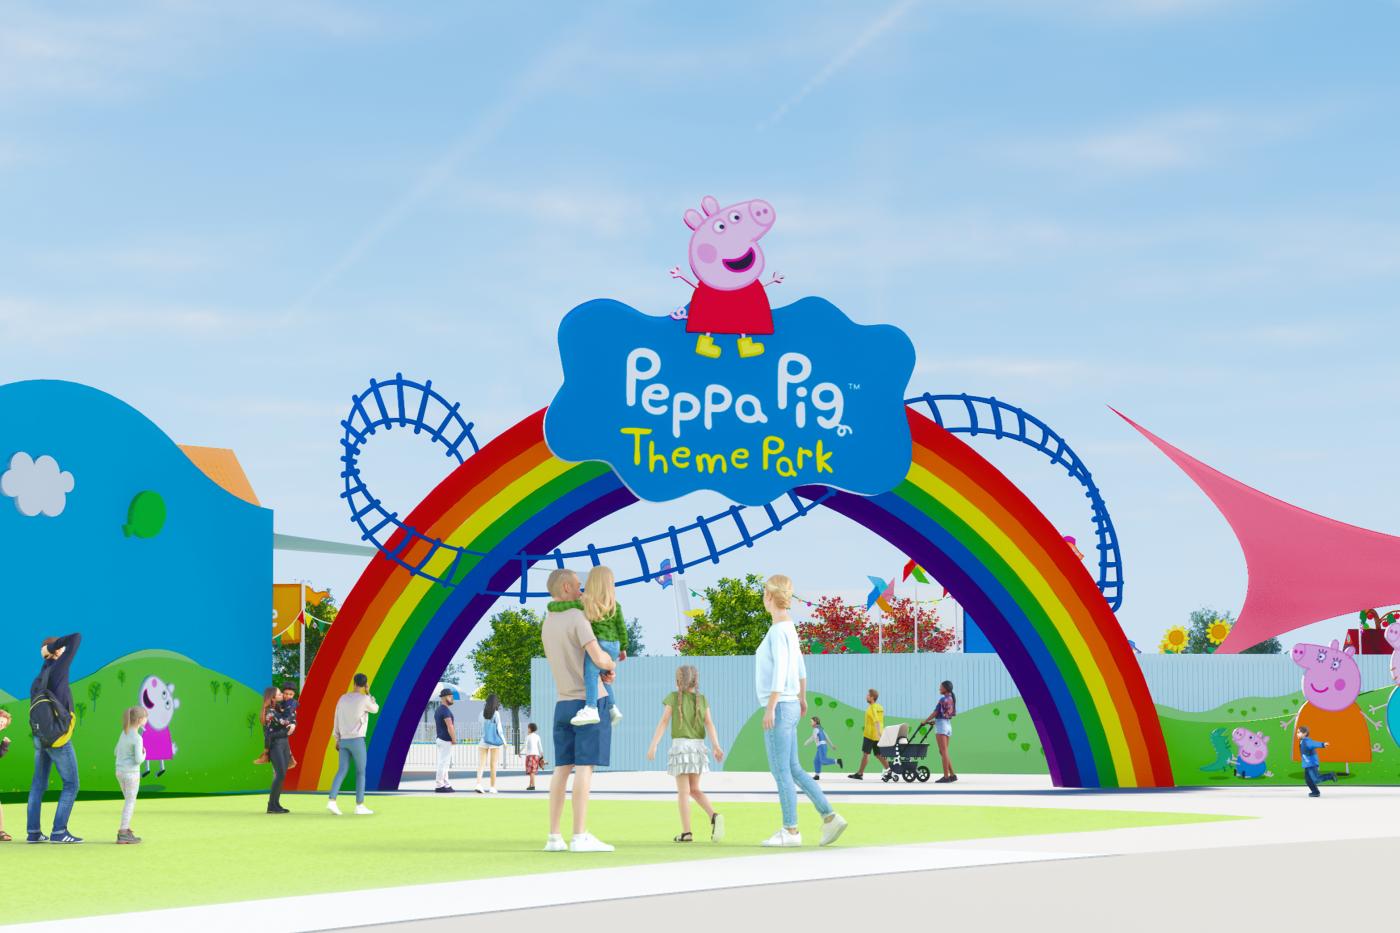 PEPPA Pig Theme Park Florida